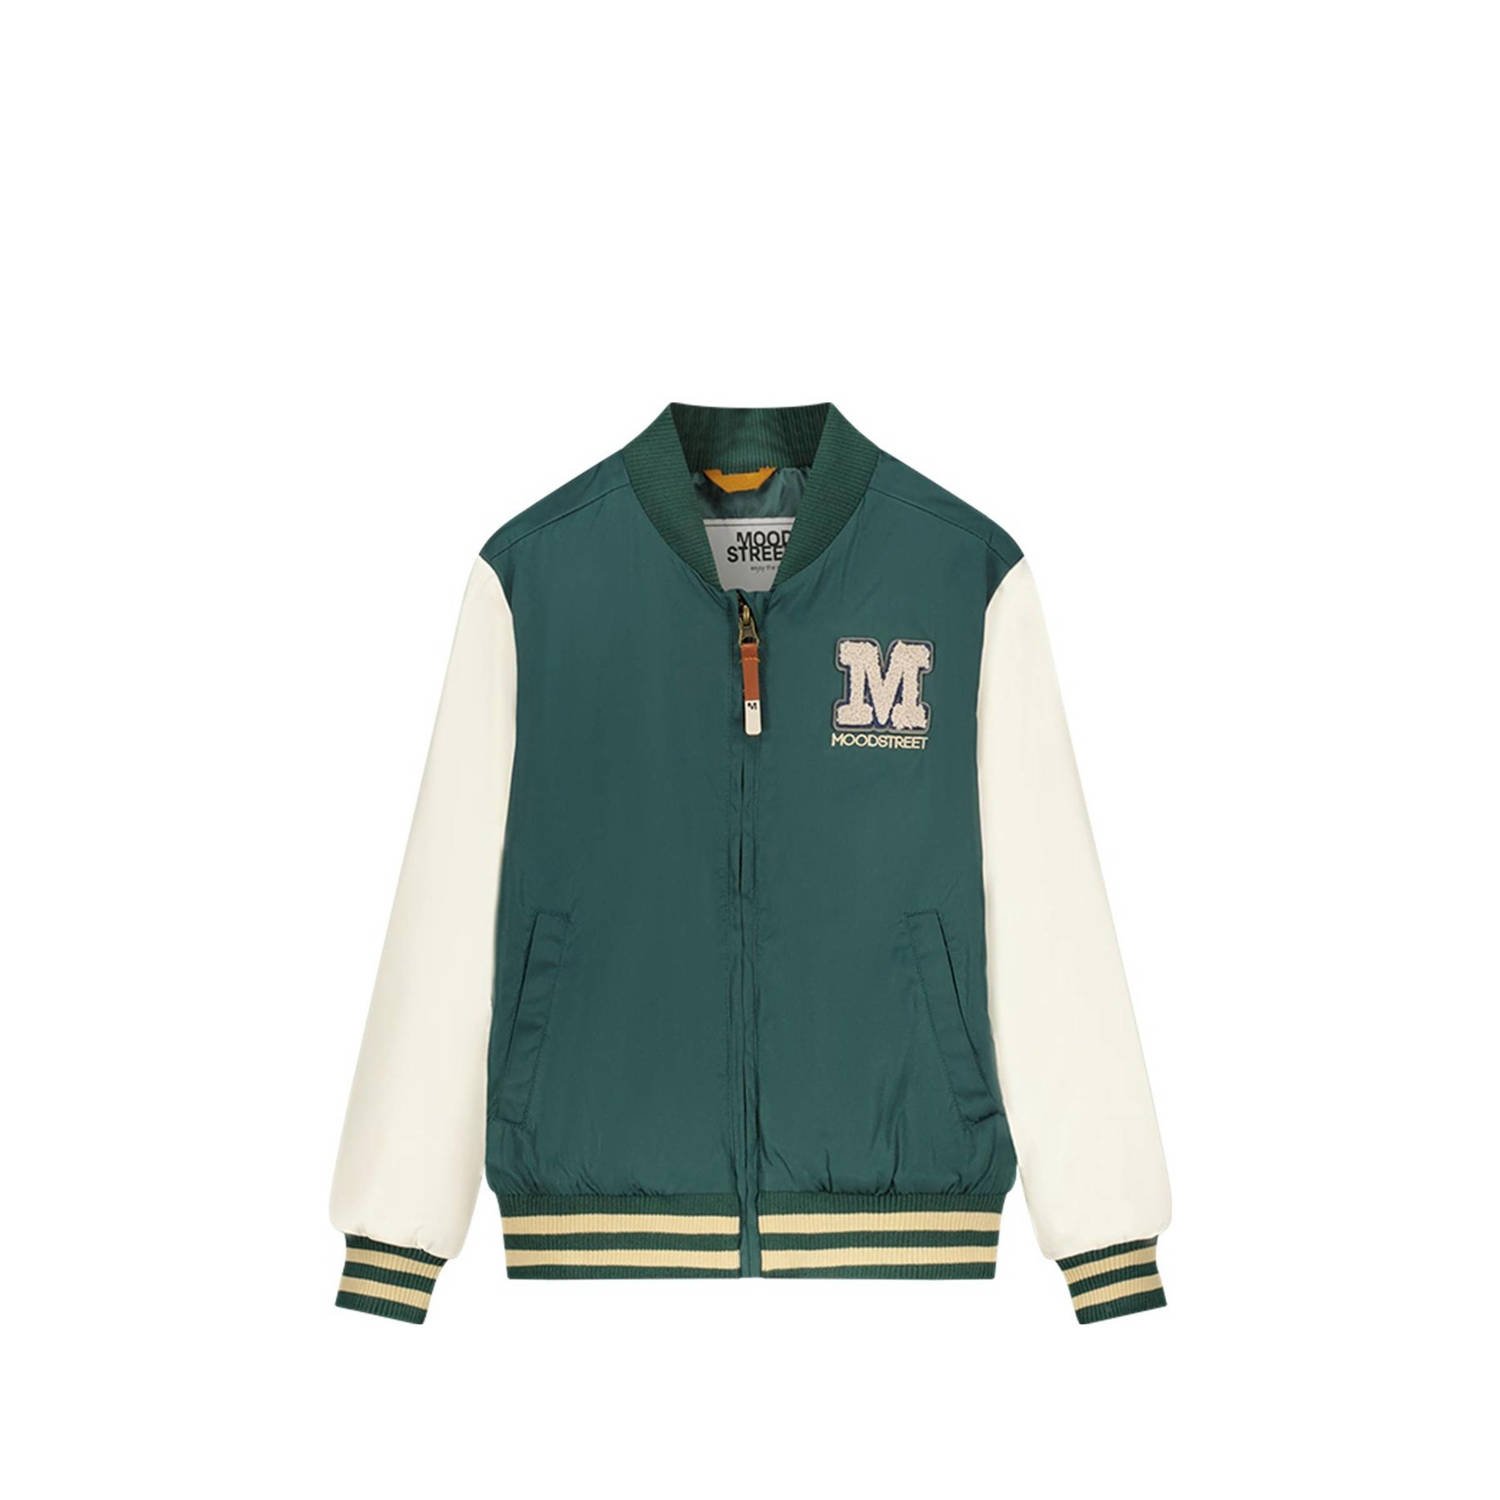 Moodstreet baseball jacket groen offwhite